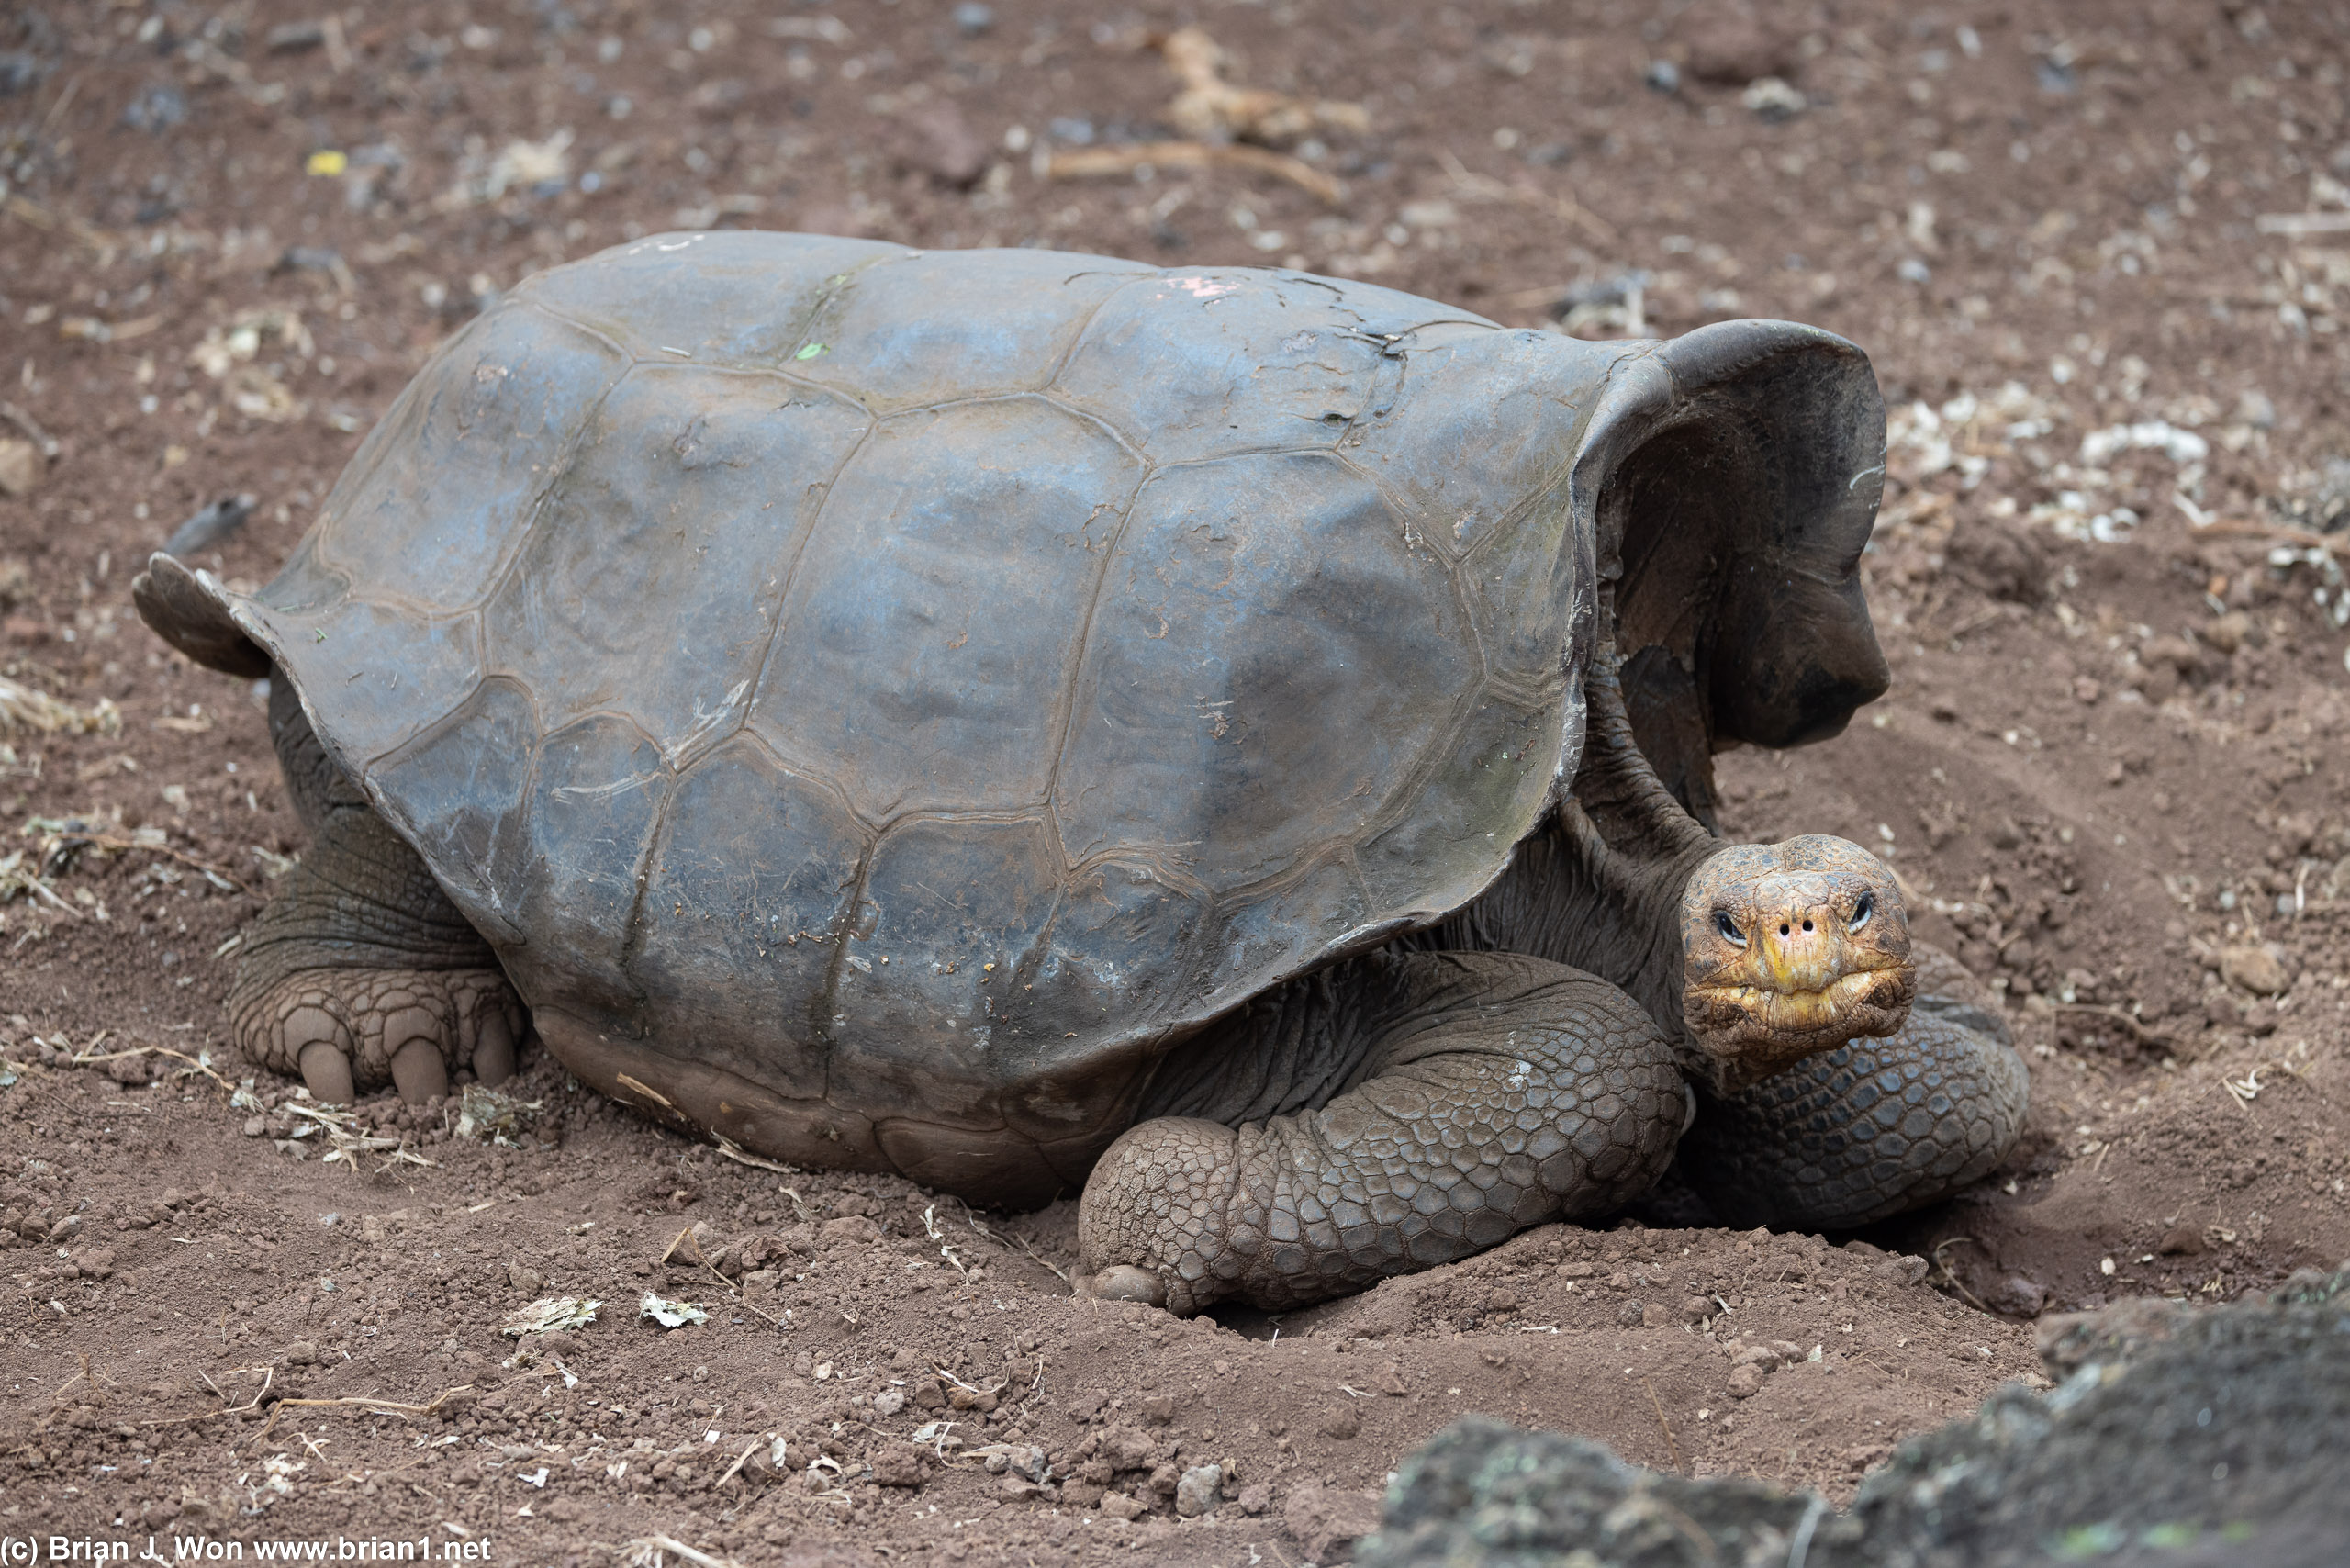 Giant tortoise at Charles Darwin Research Station on Isla Santa Cruz.